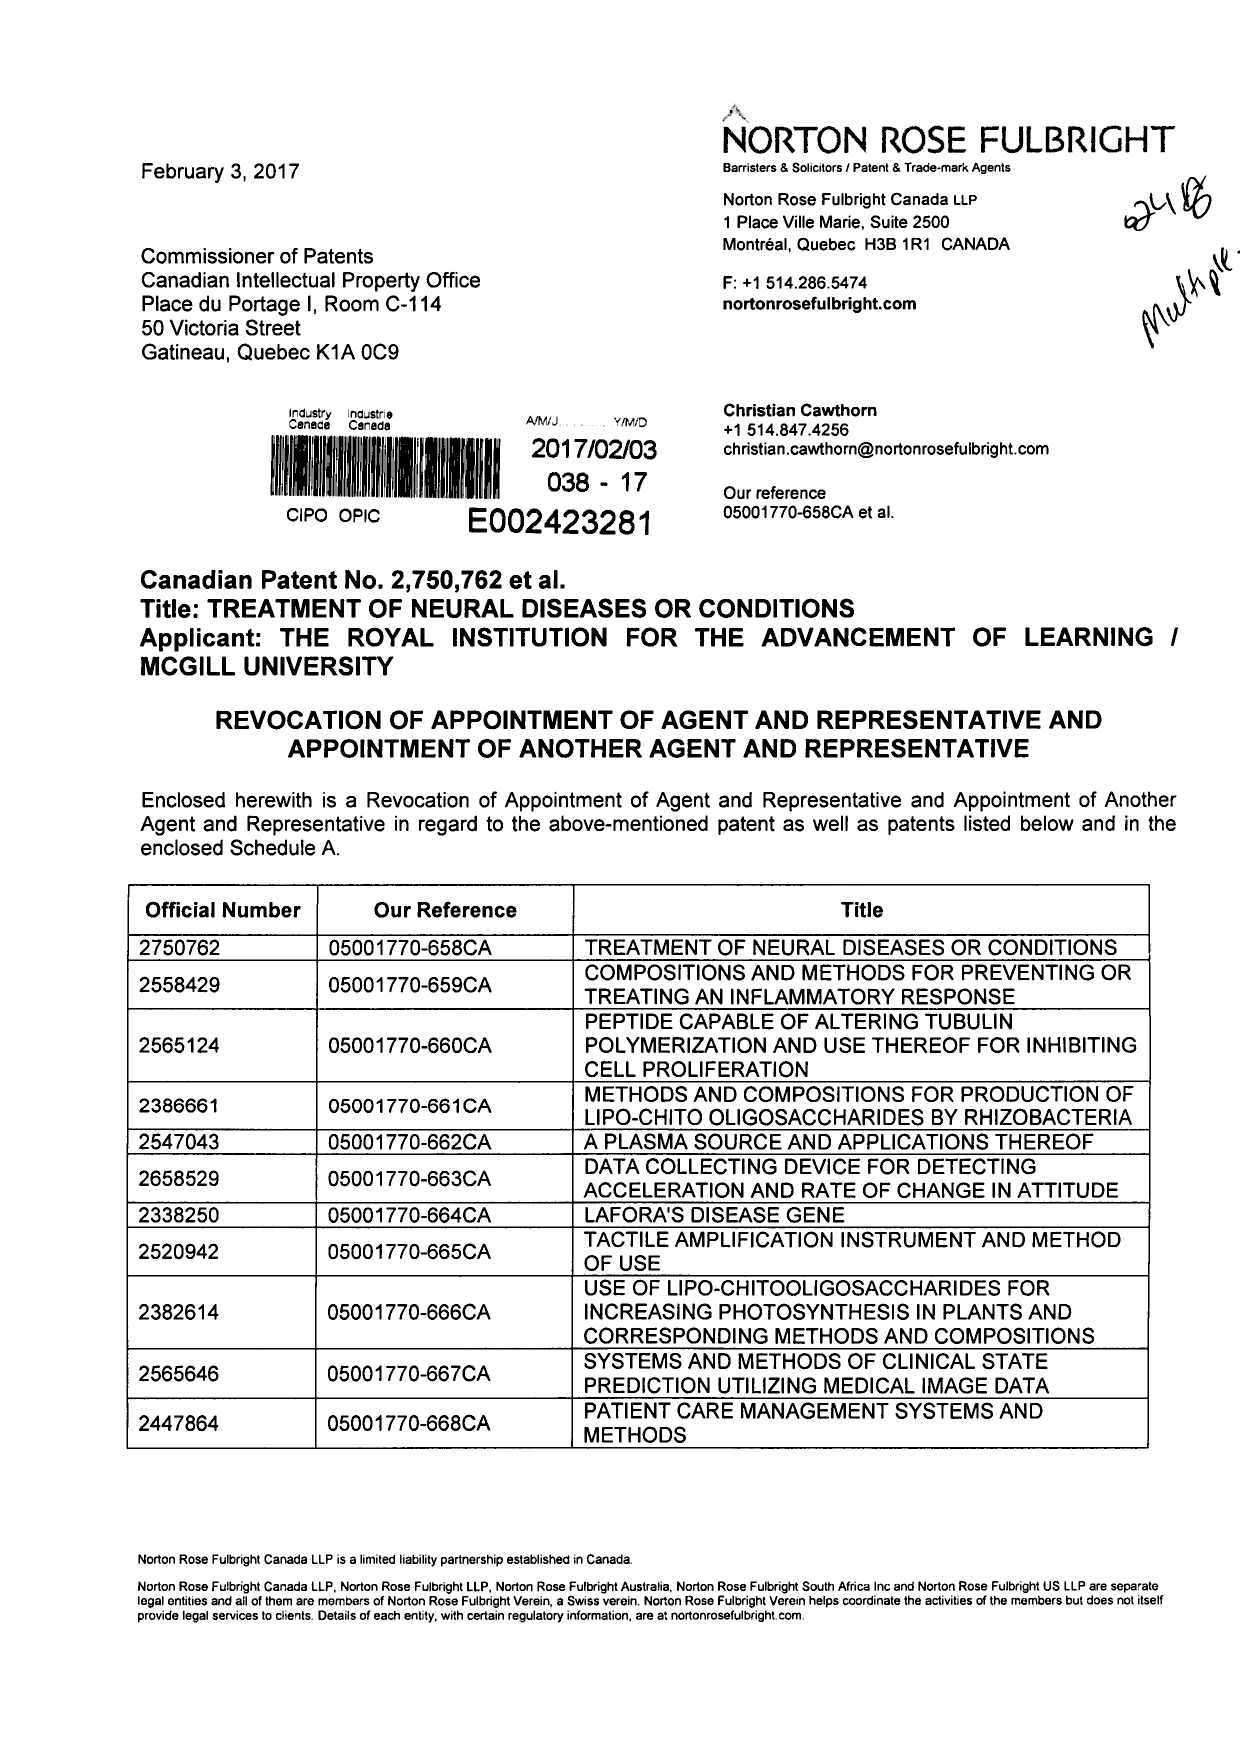 Canadian Patent Document 2547043. Correspondence 20161203. Image 1 of 4